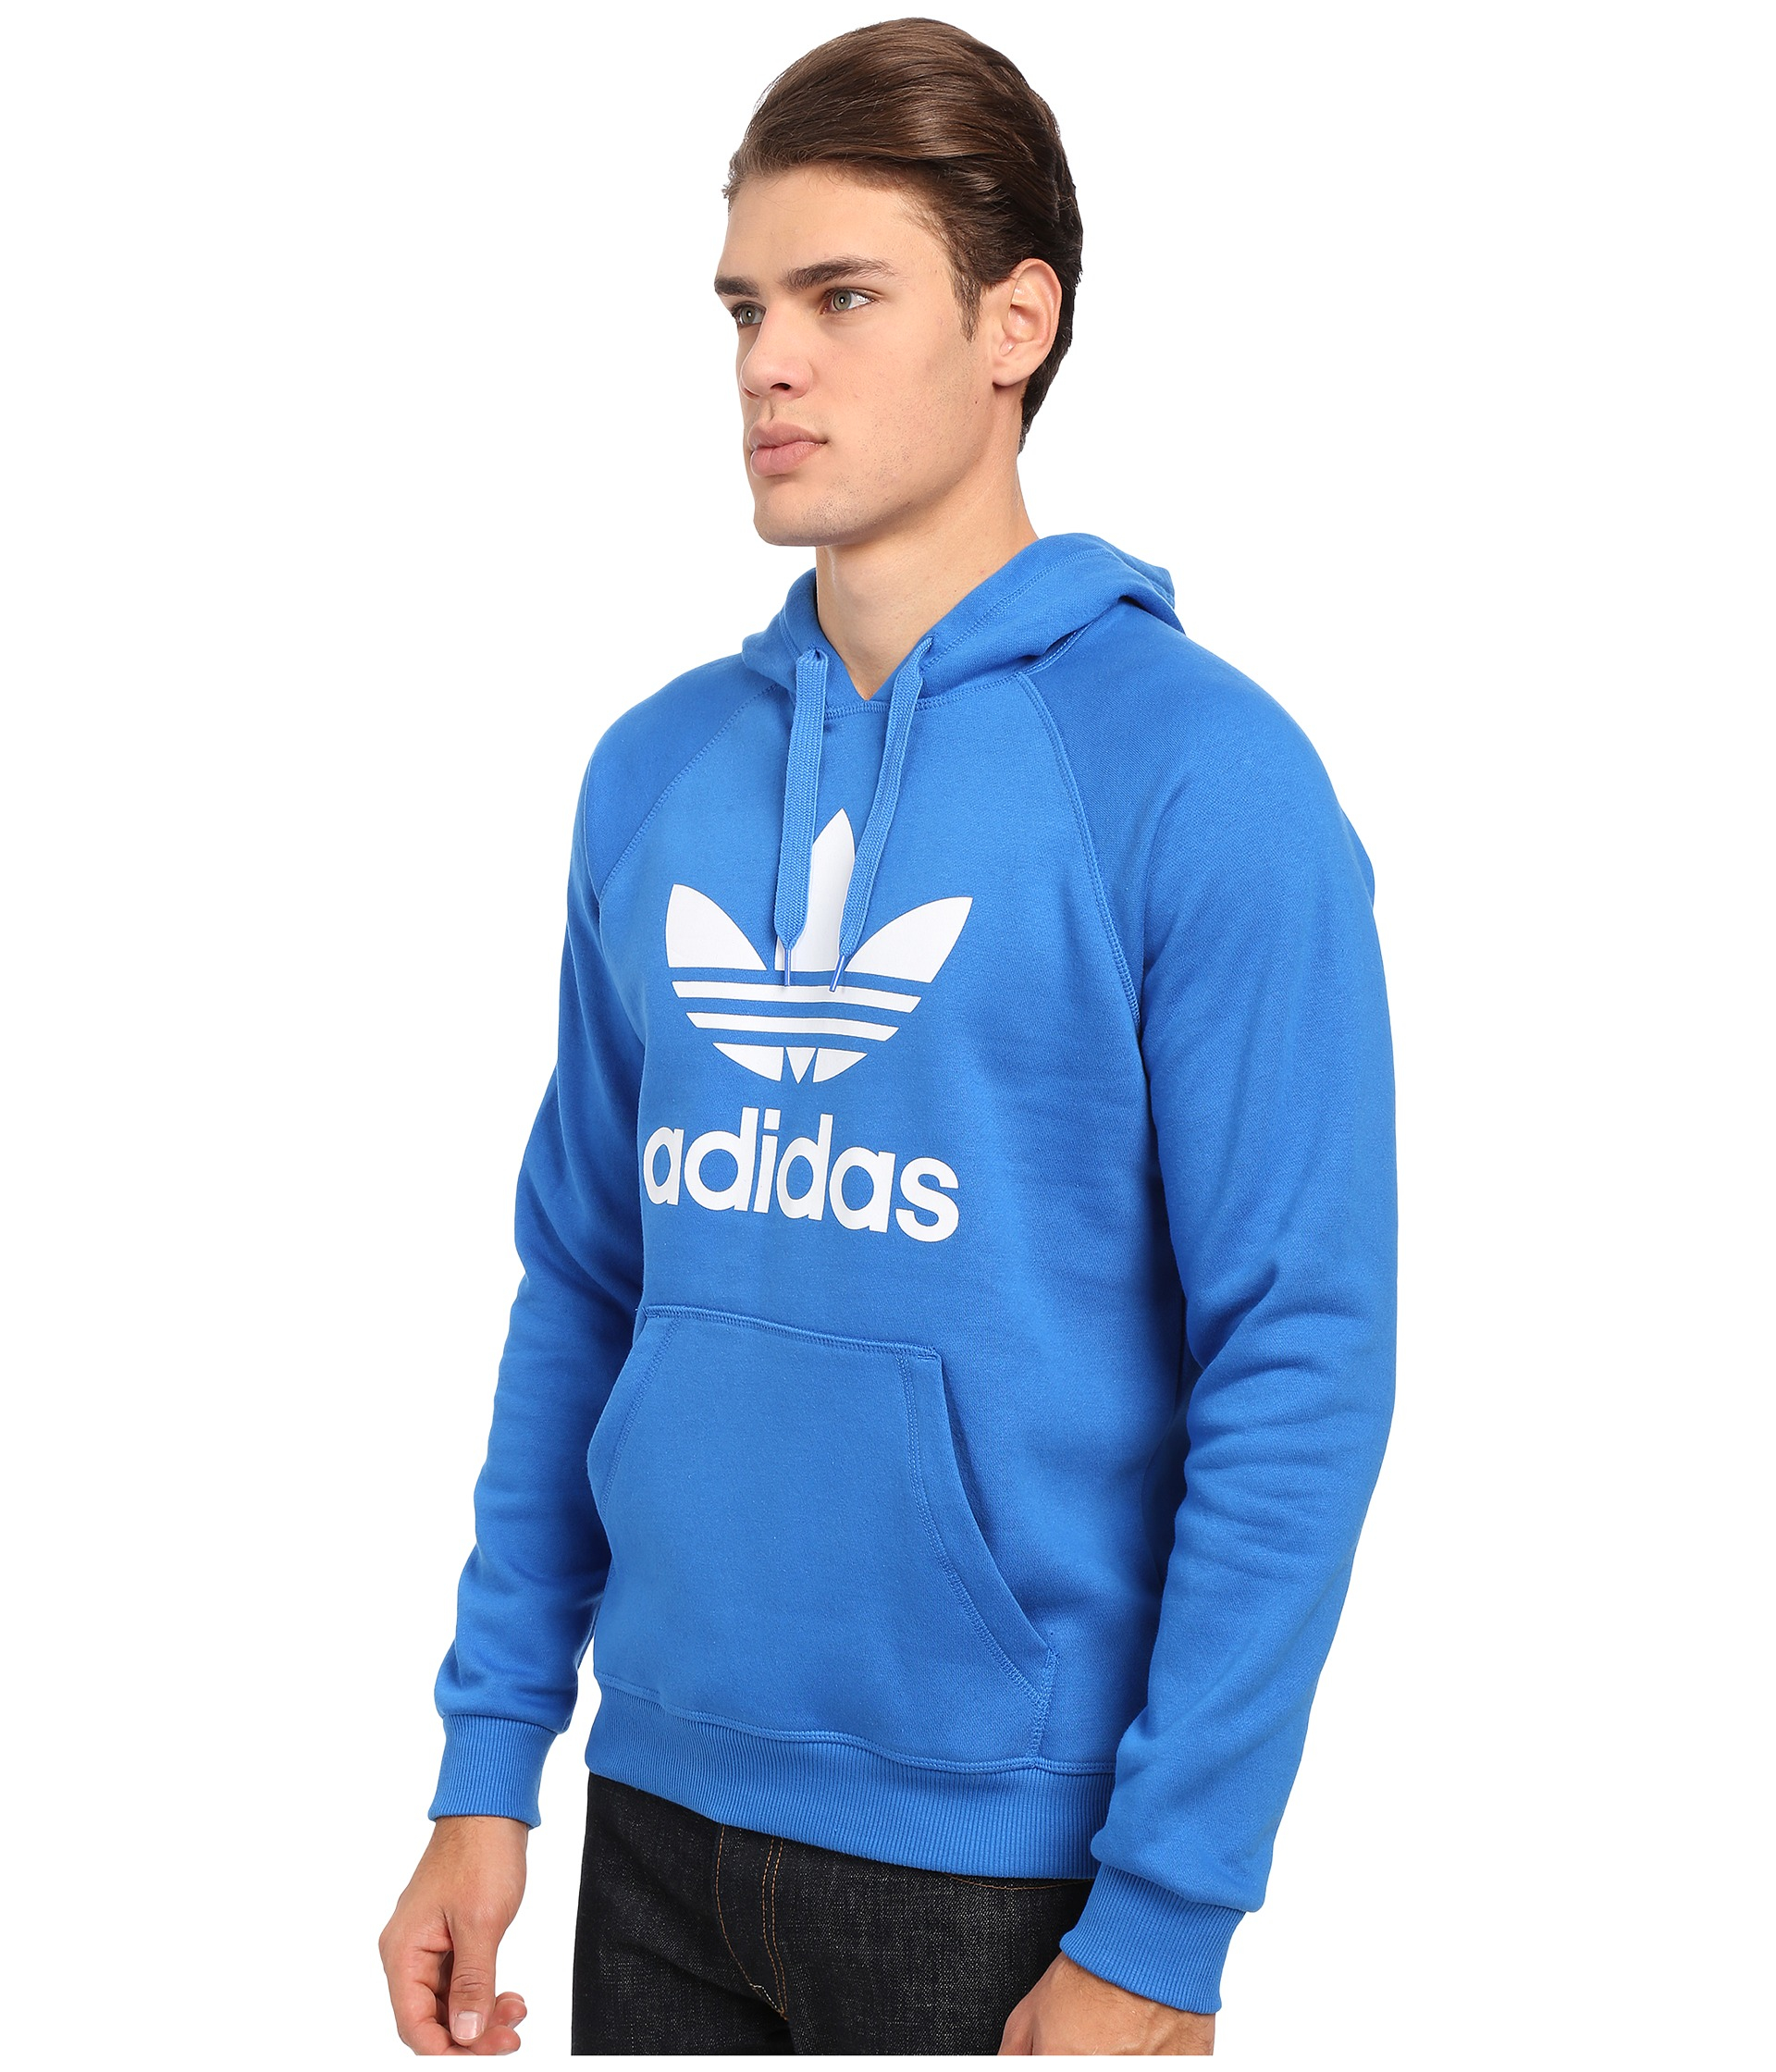 adidas Originals Cotton Trefoil Sweatshirt in Blue for Men - Lyst